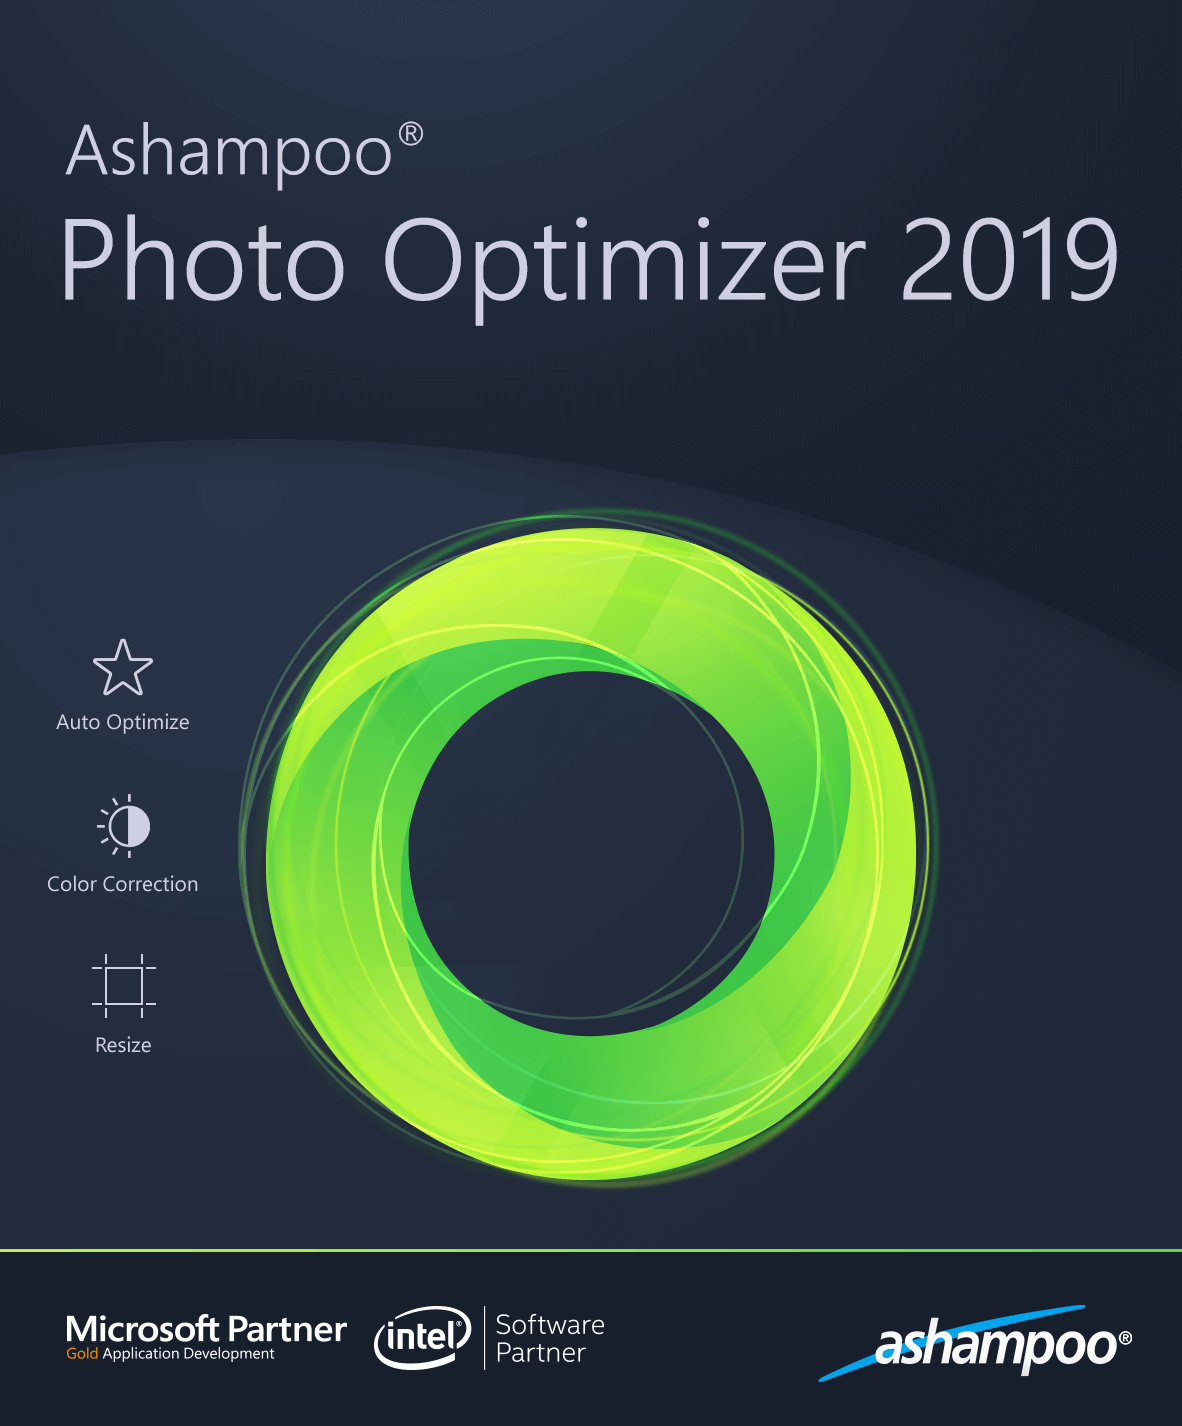 how to use ashampoo photo optimizer 2019